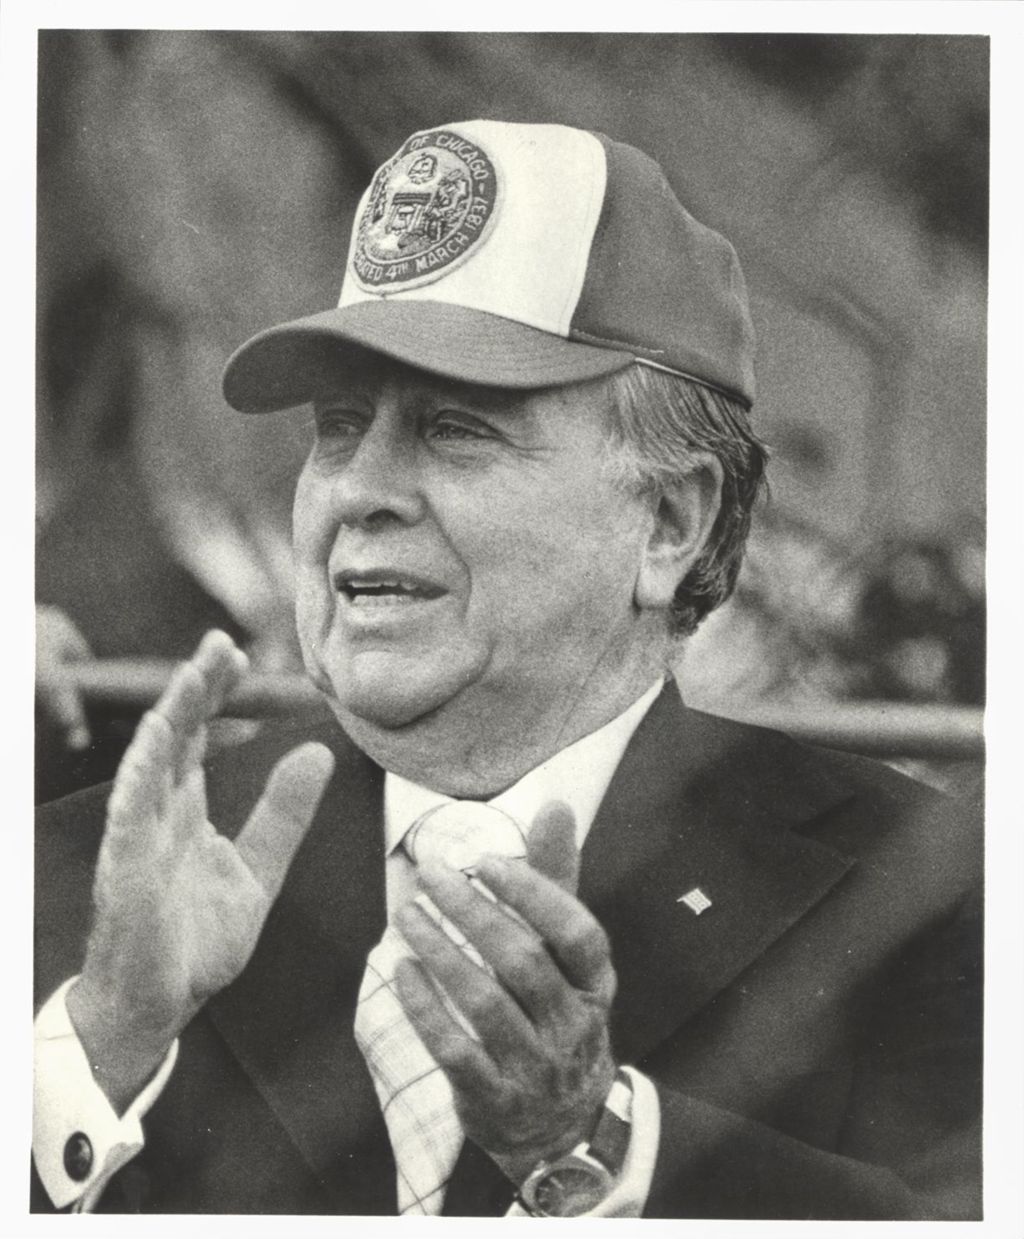 Miniature of Richard J. Daley wearing a baseball cap